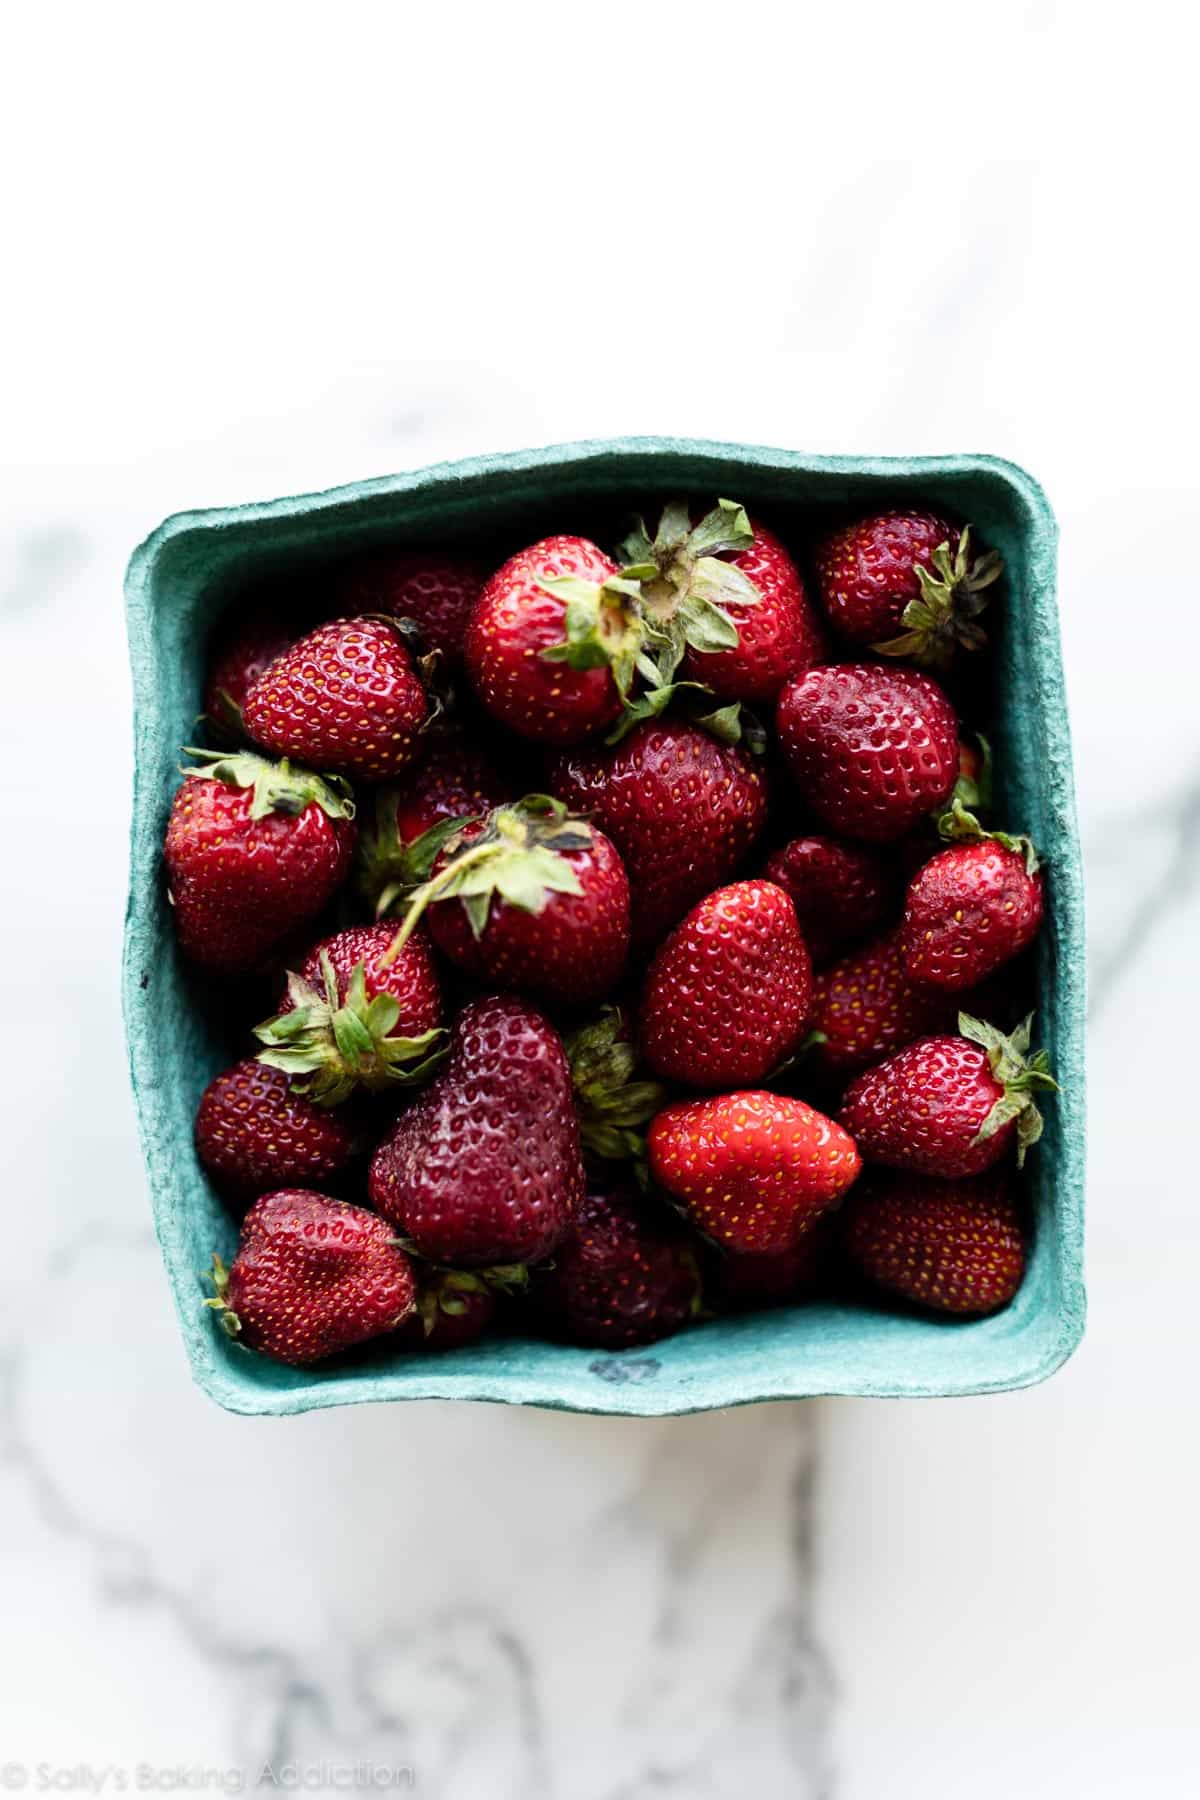 Organic strawberries in a carton